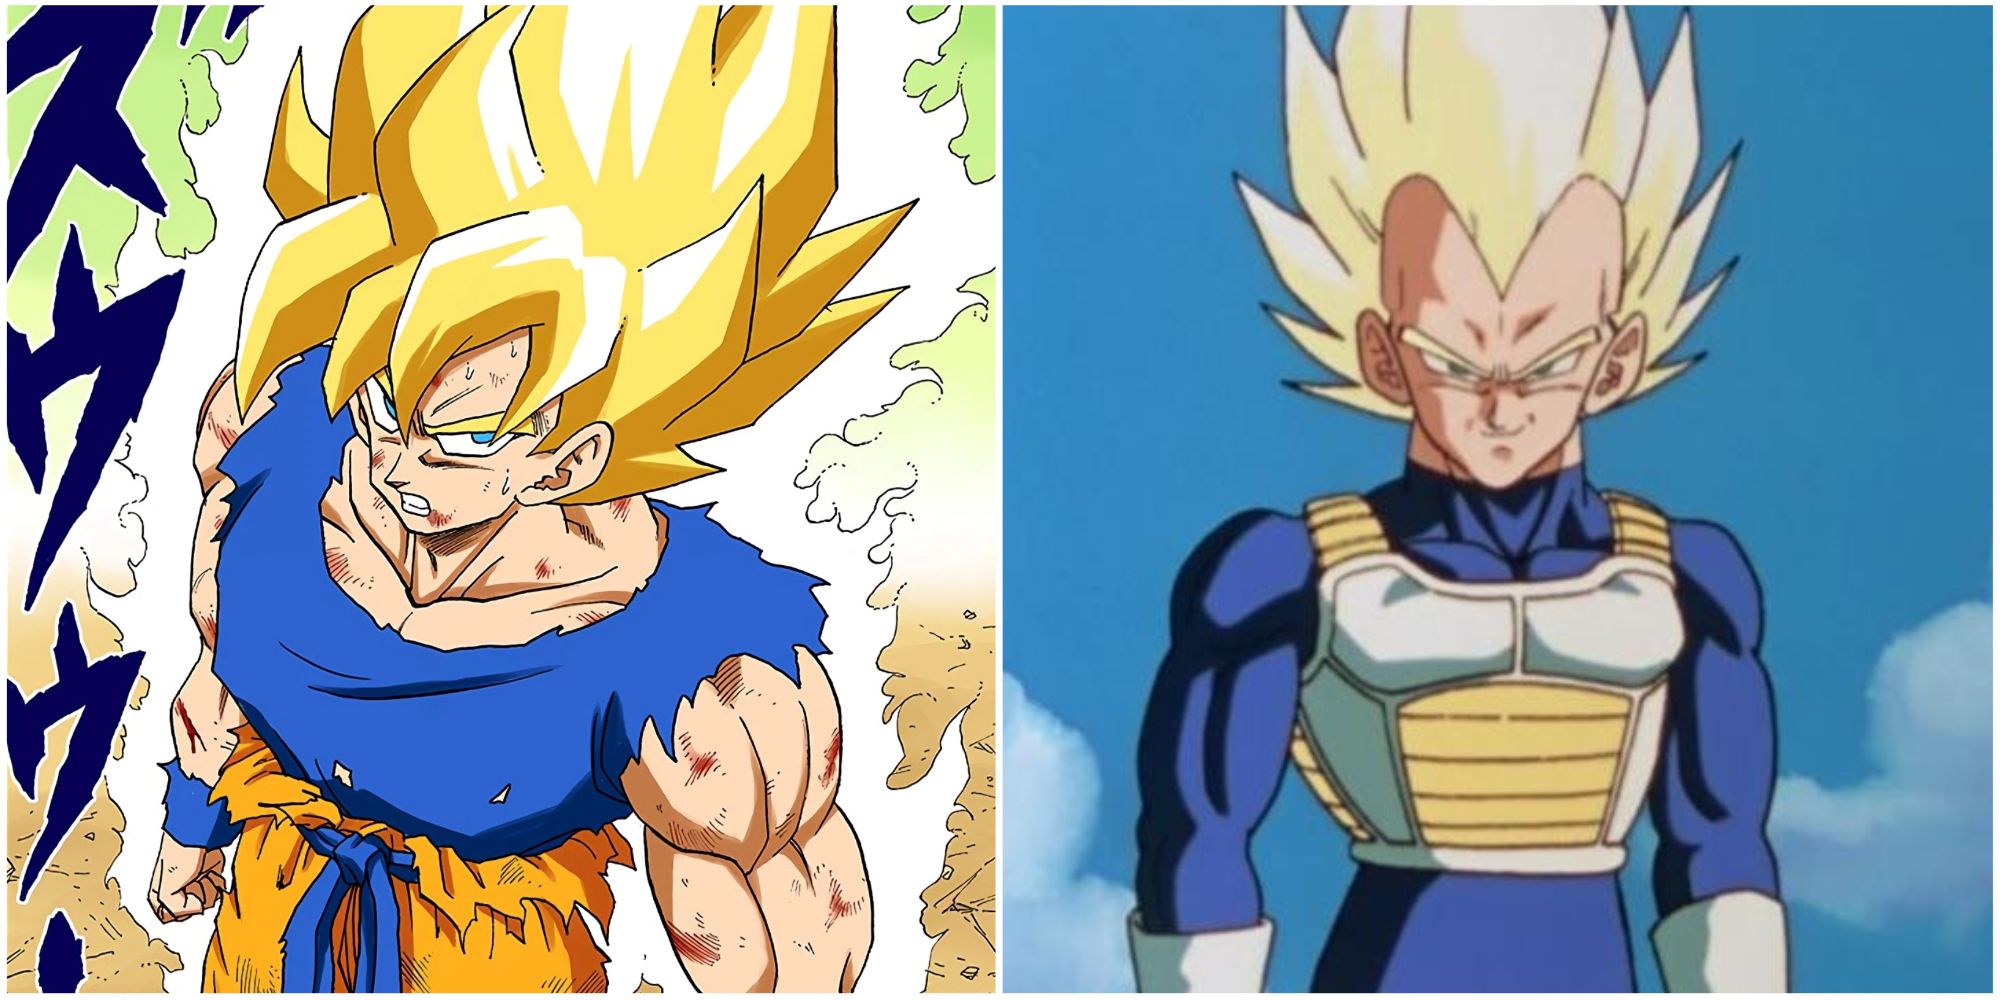 Super Saiyan Goku and Vegeta in Dragon Ball Z